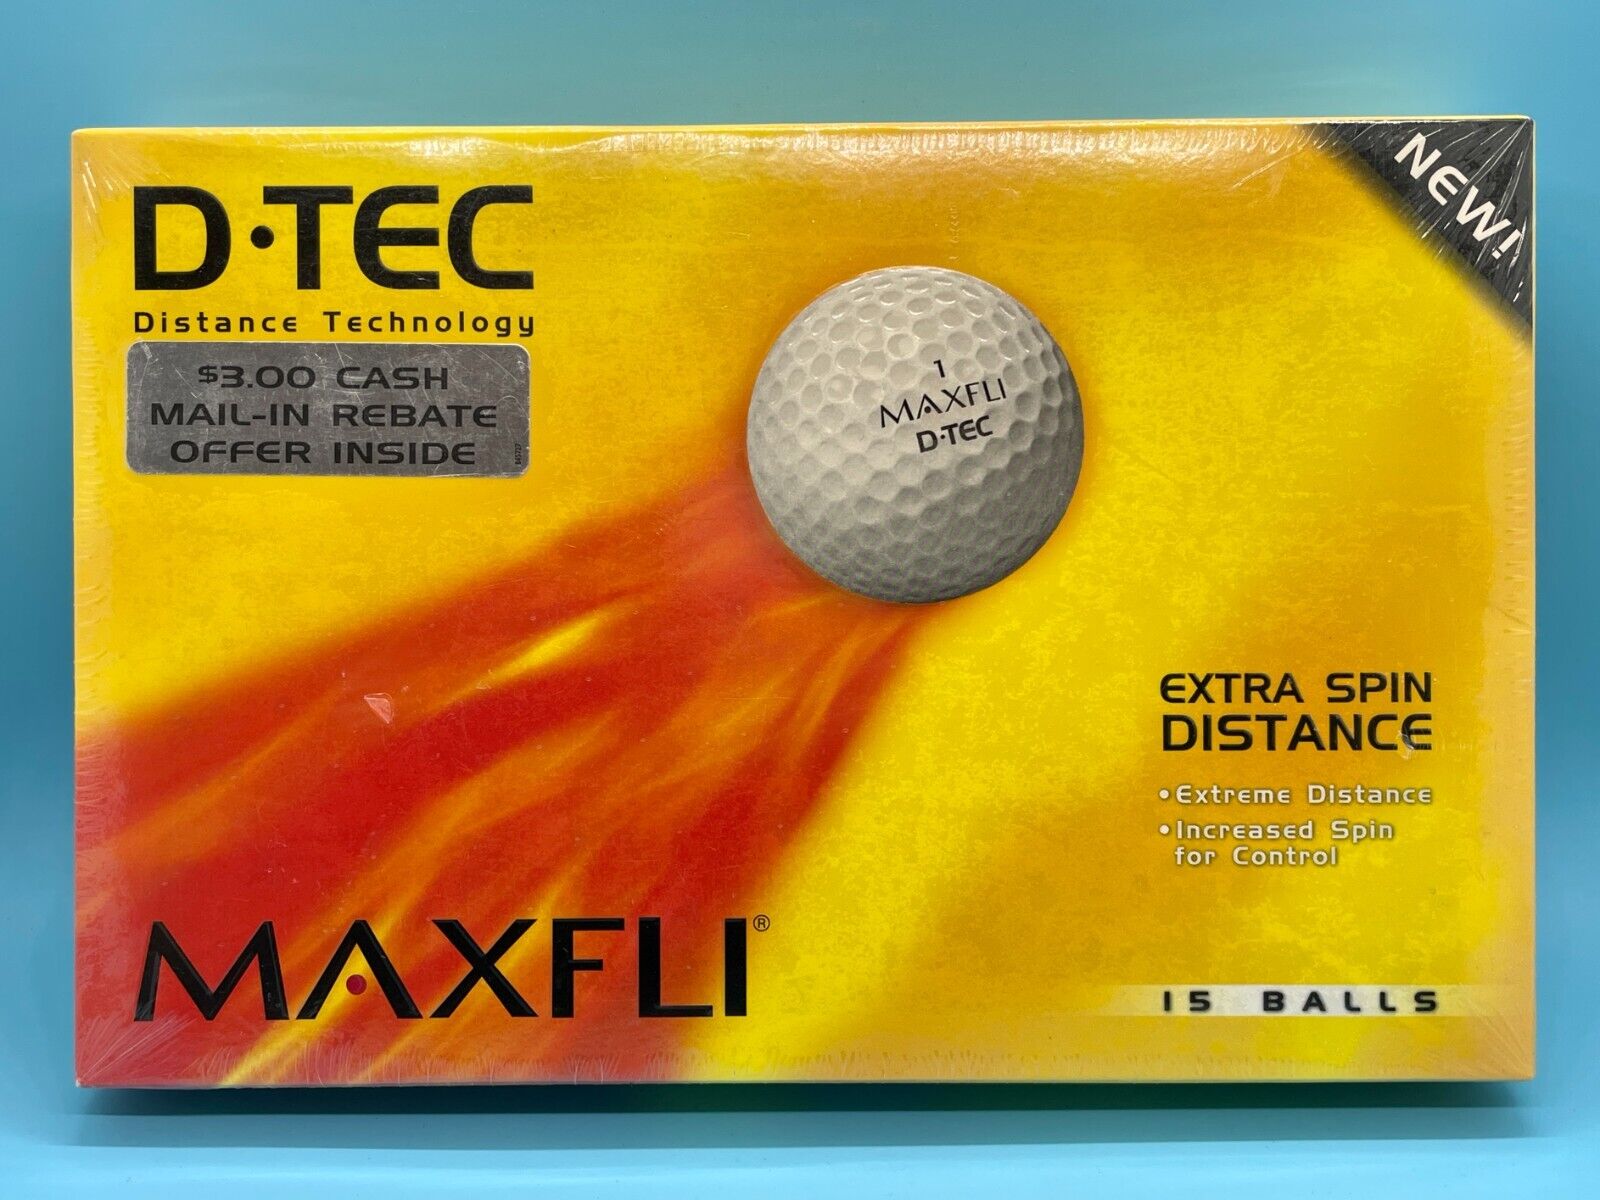 MAXFLI D TEC D-TEC Extra Spin Distance Golf Balls - Box of 15 New Sealed